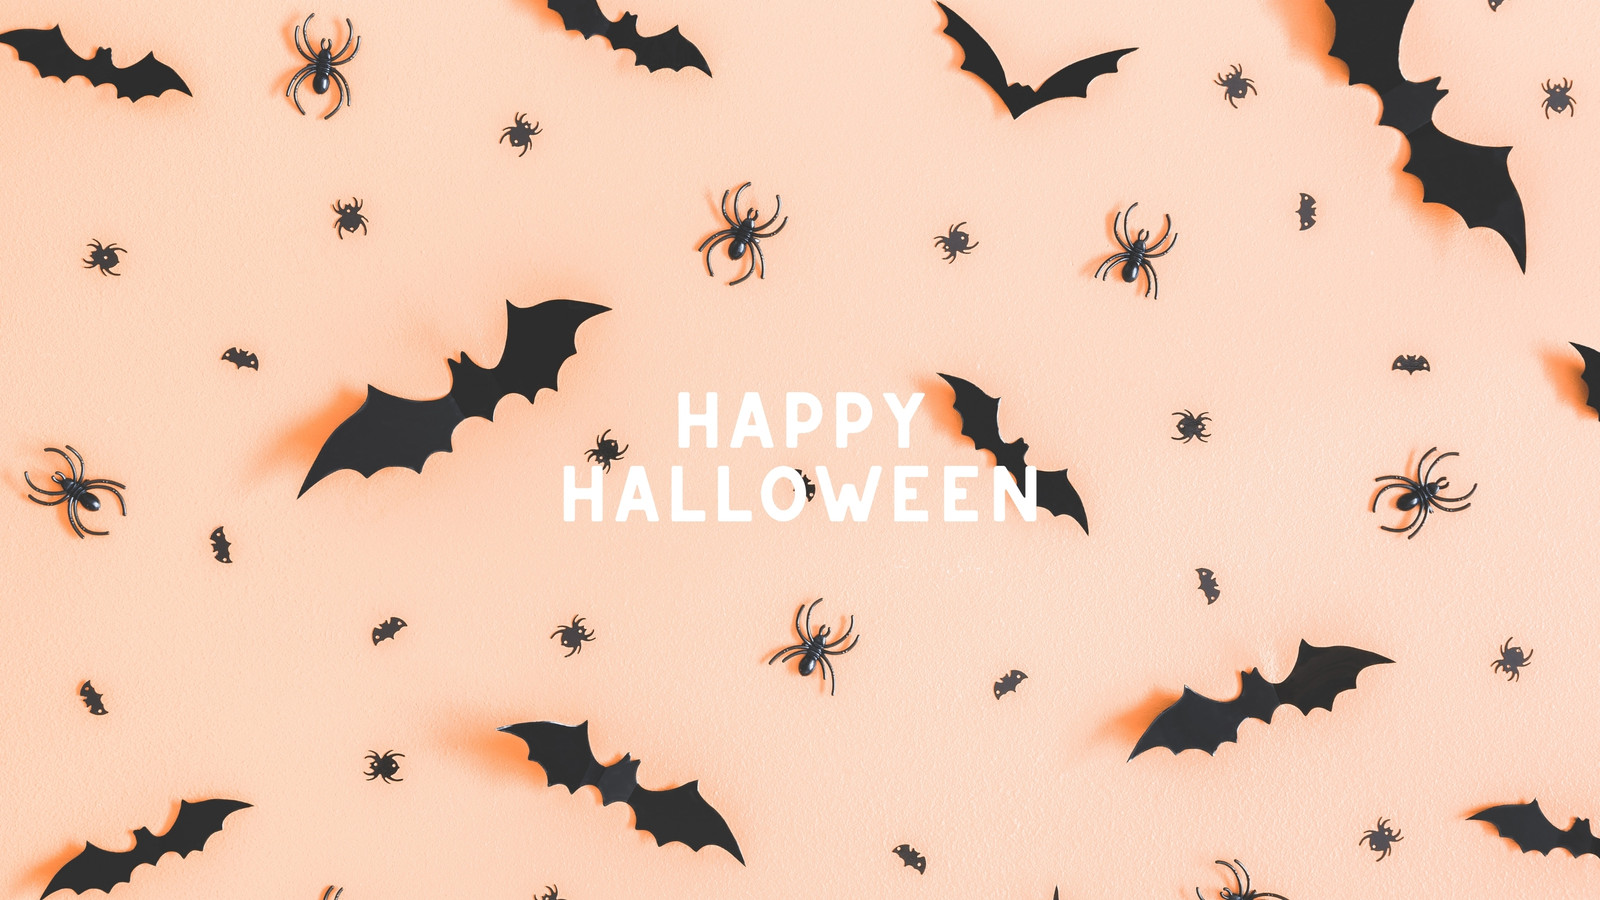 Free customizable Halloween desktop wallpaper templates | Canva